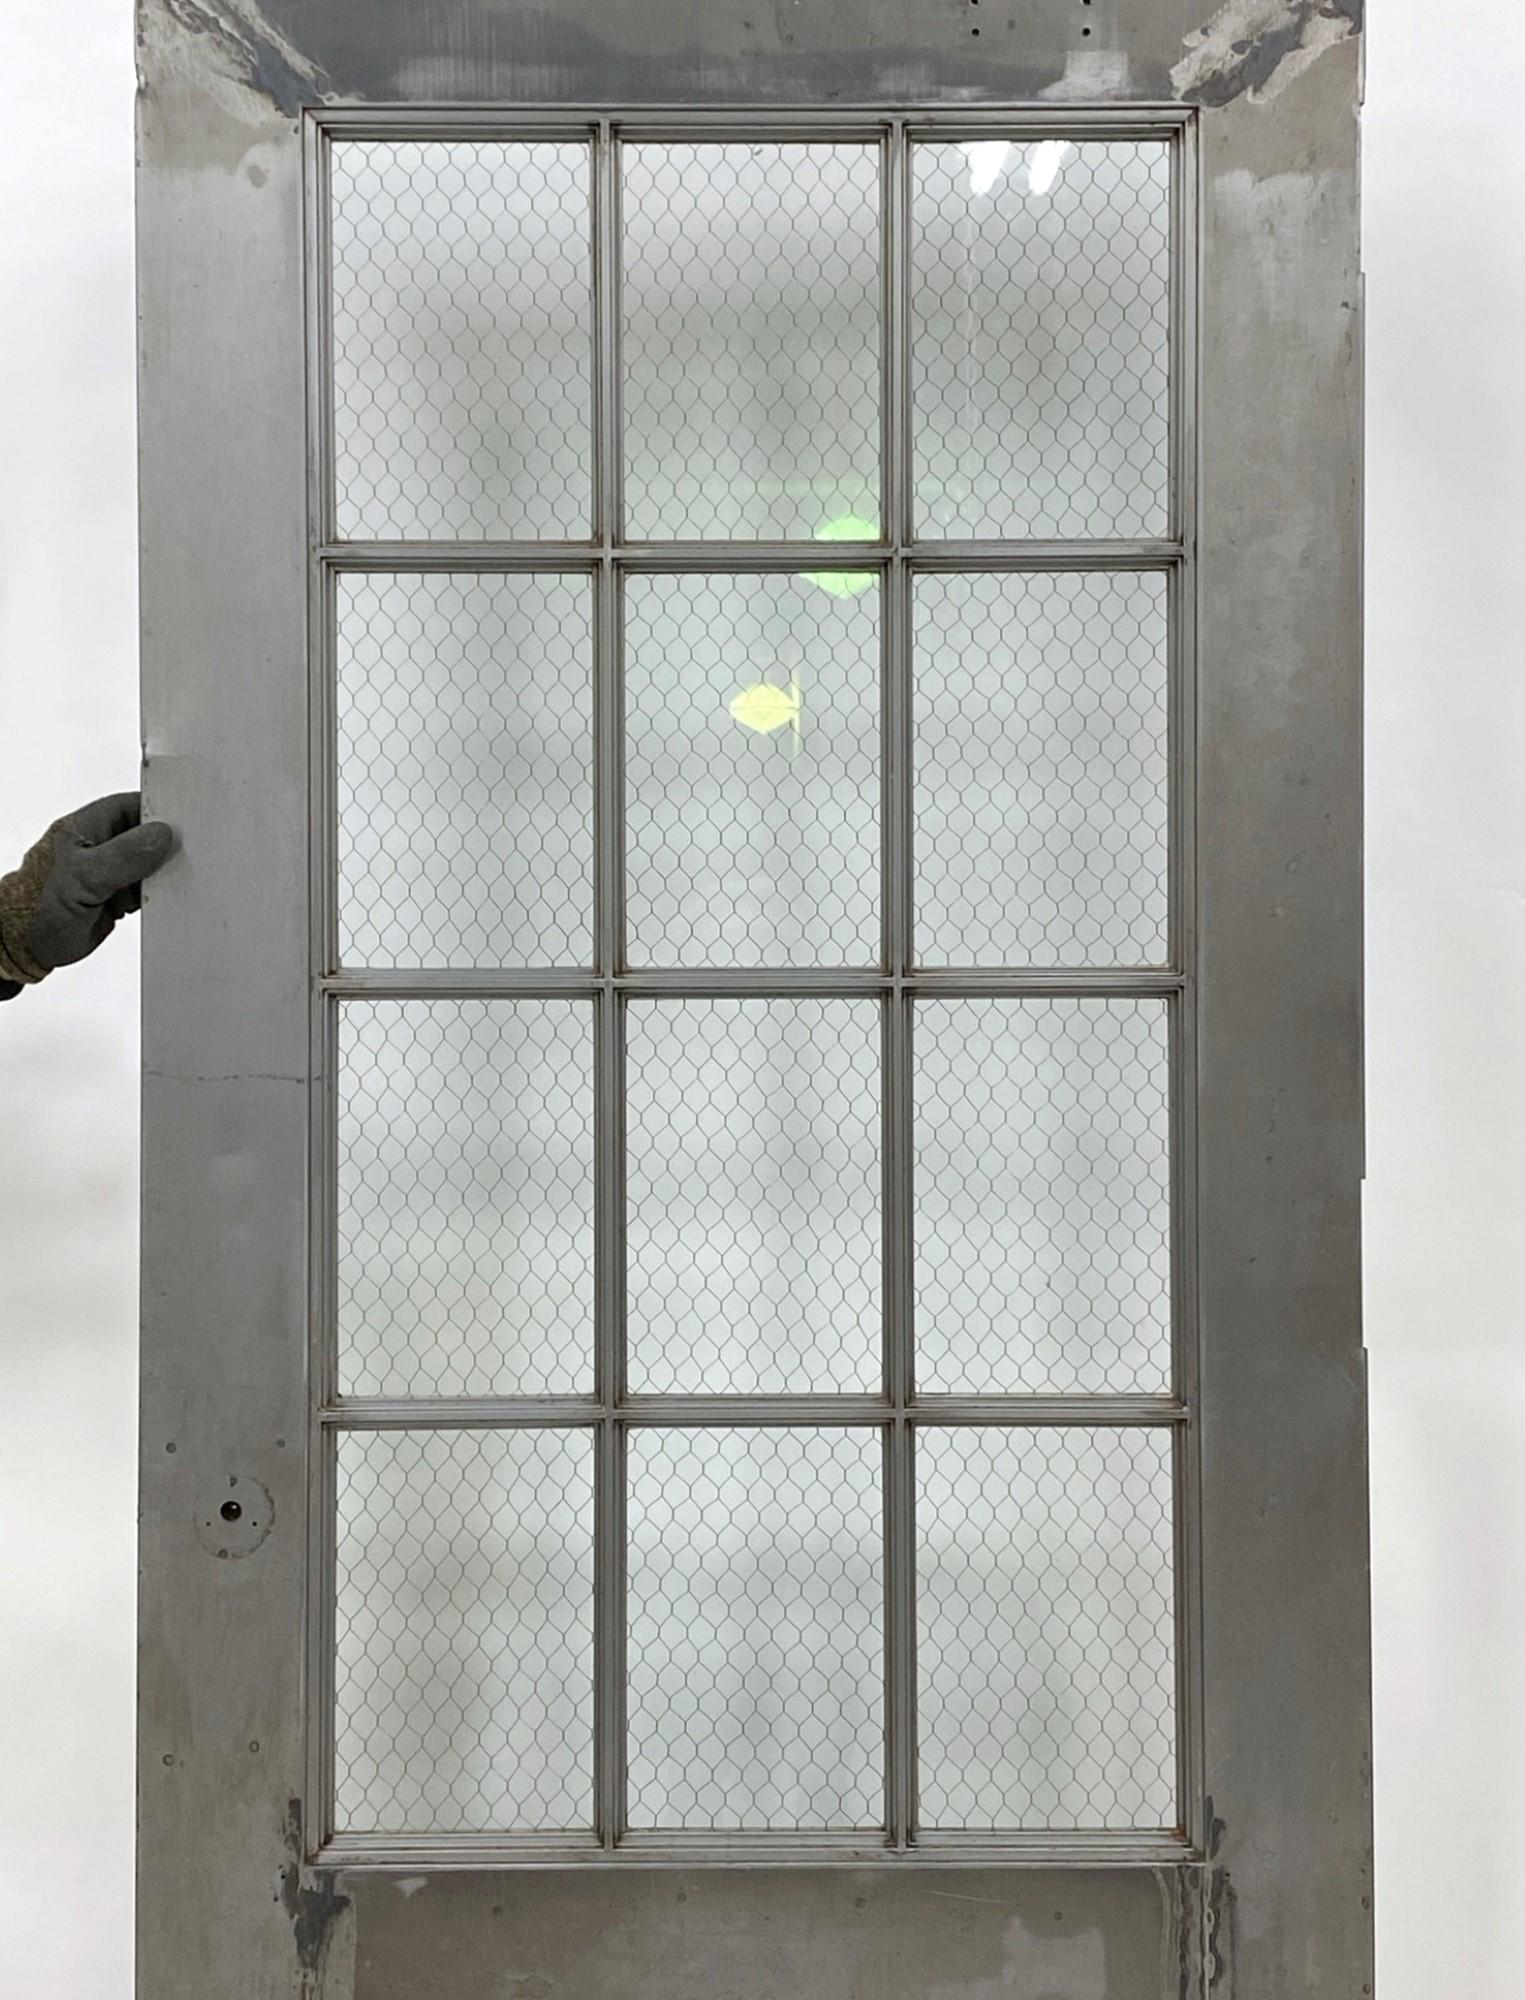 Mid-20th Century 1930s Steel Fire Door with Chicken Wire Glass 12 Lites by Art Metal Co.